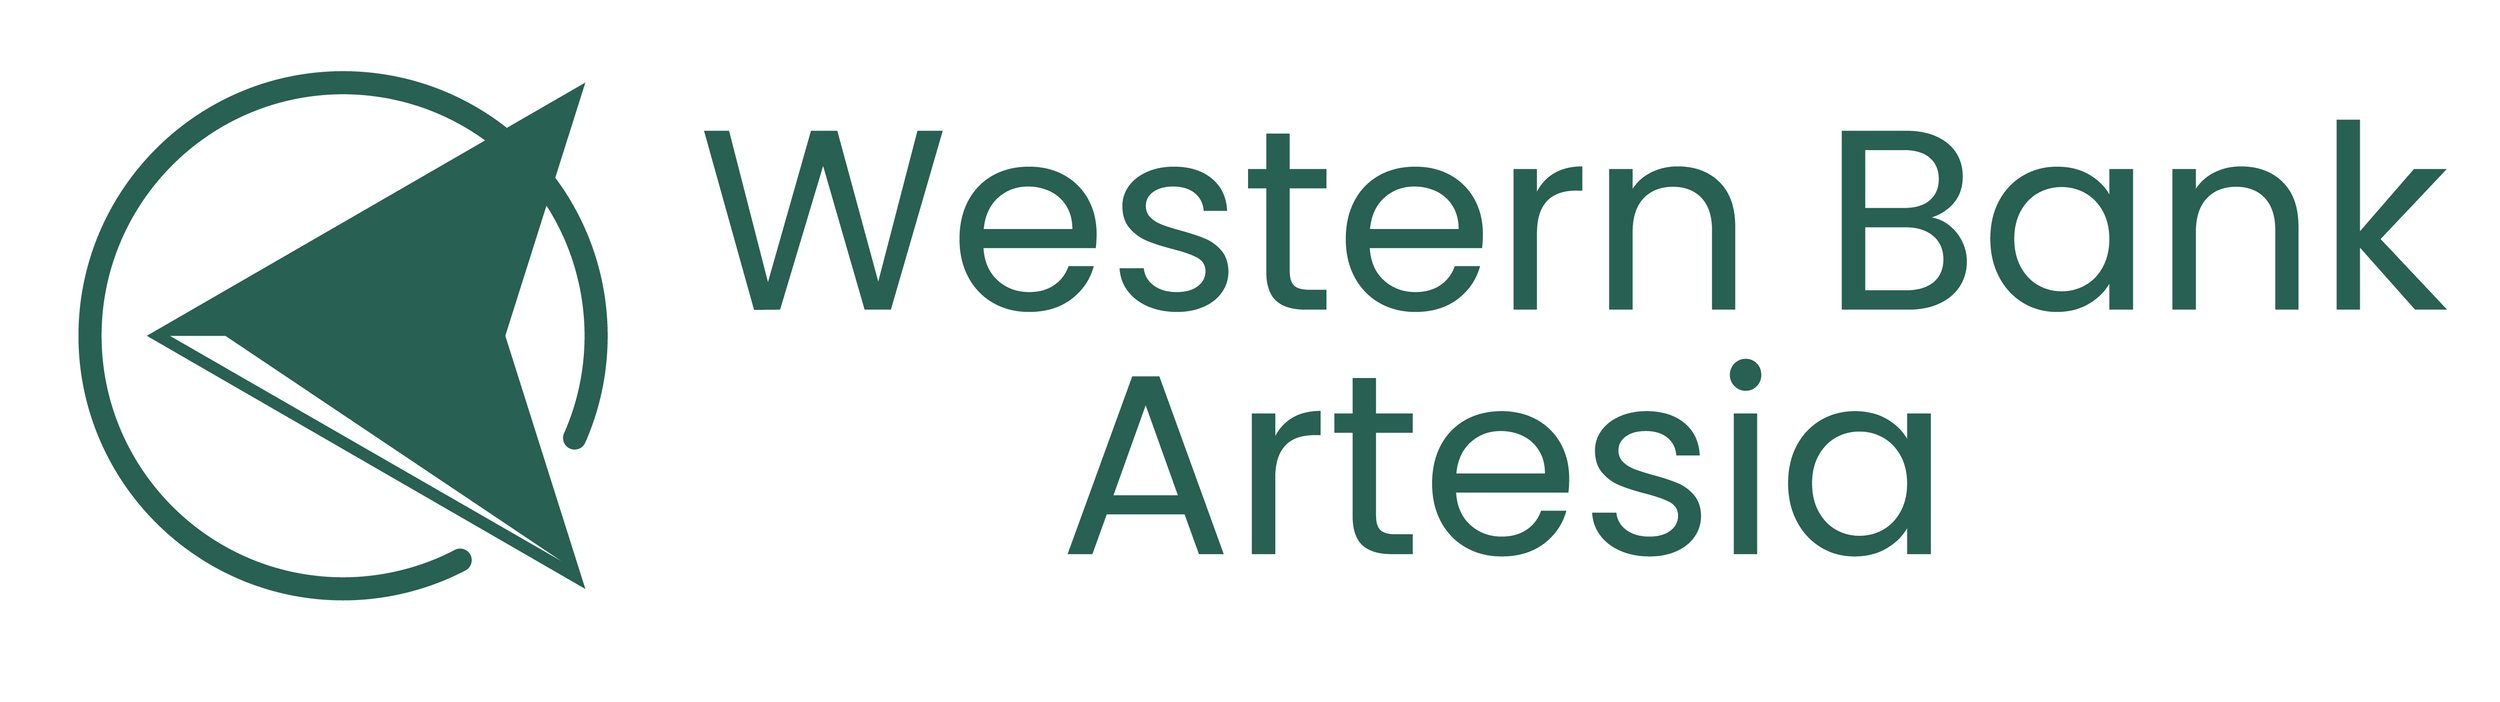 Western Bank Artesia - Primary Logo - Green.jpg